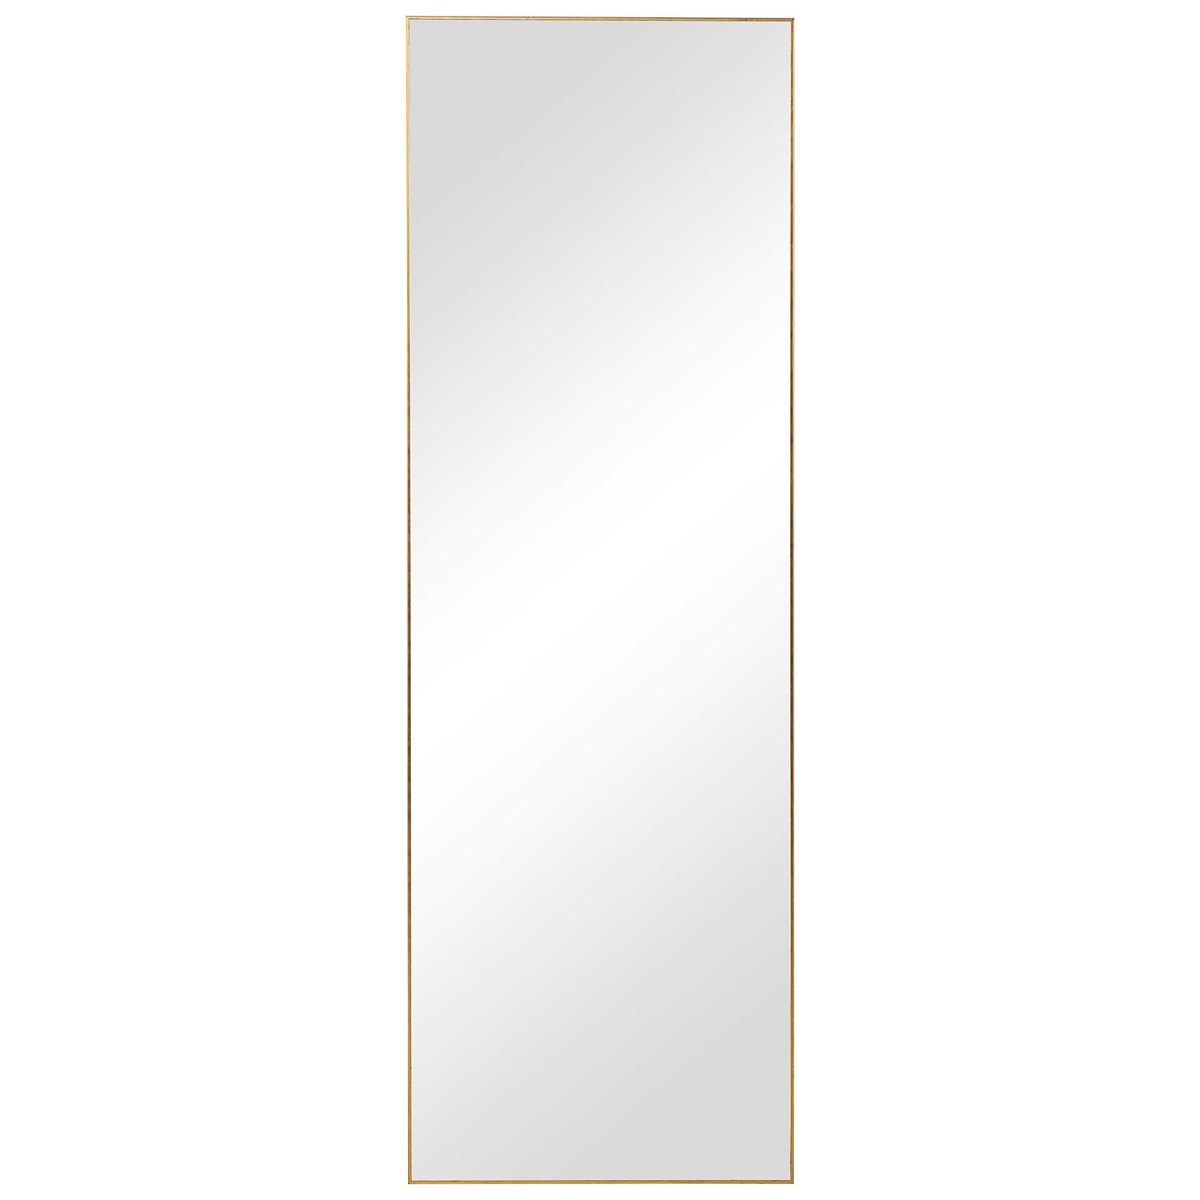 19.53" x 59.53" Thin Frame Mirror, Gold - Image 0